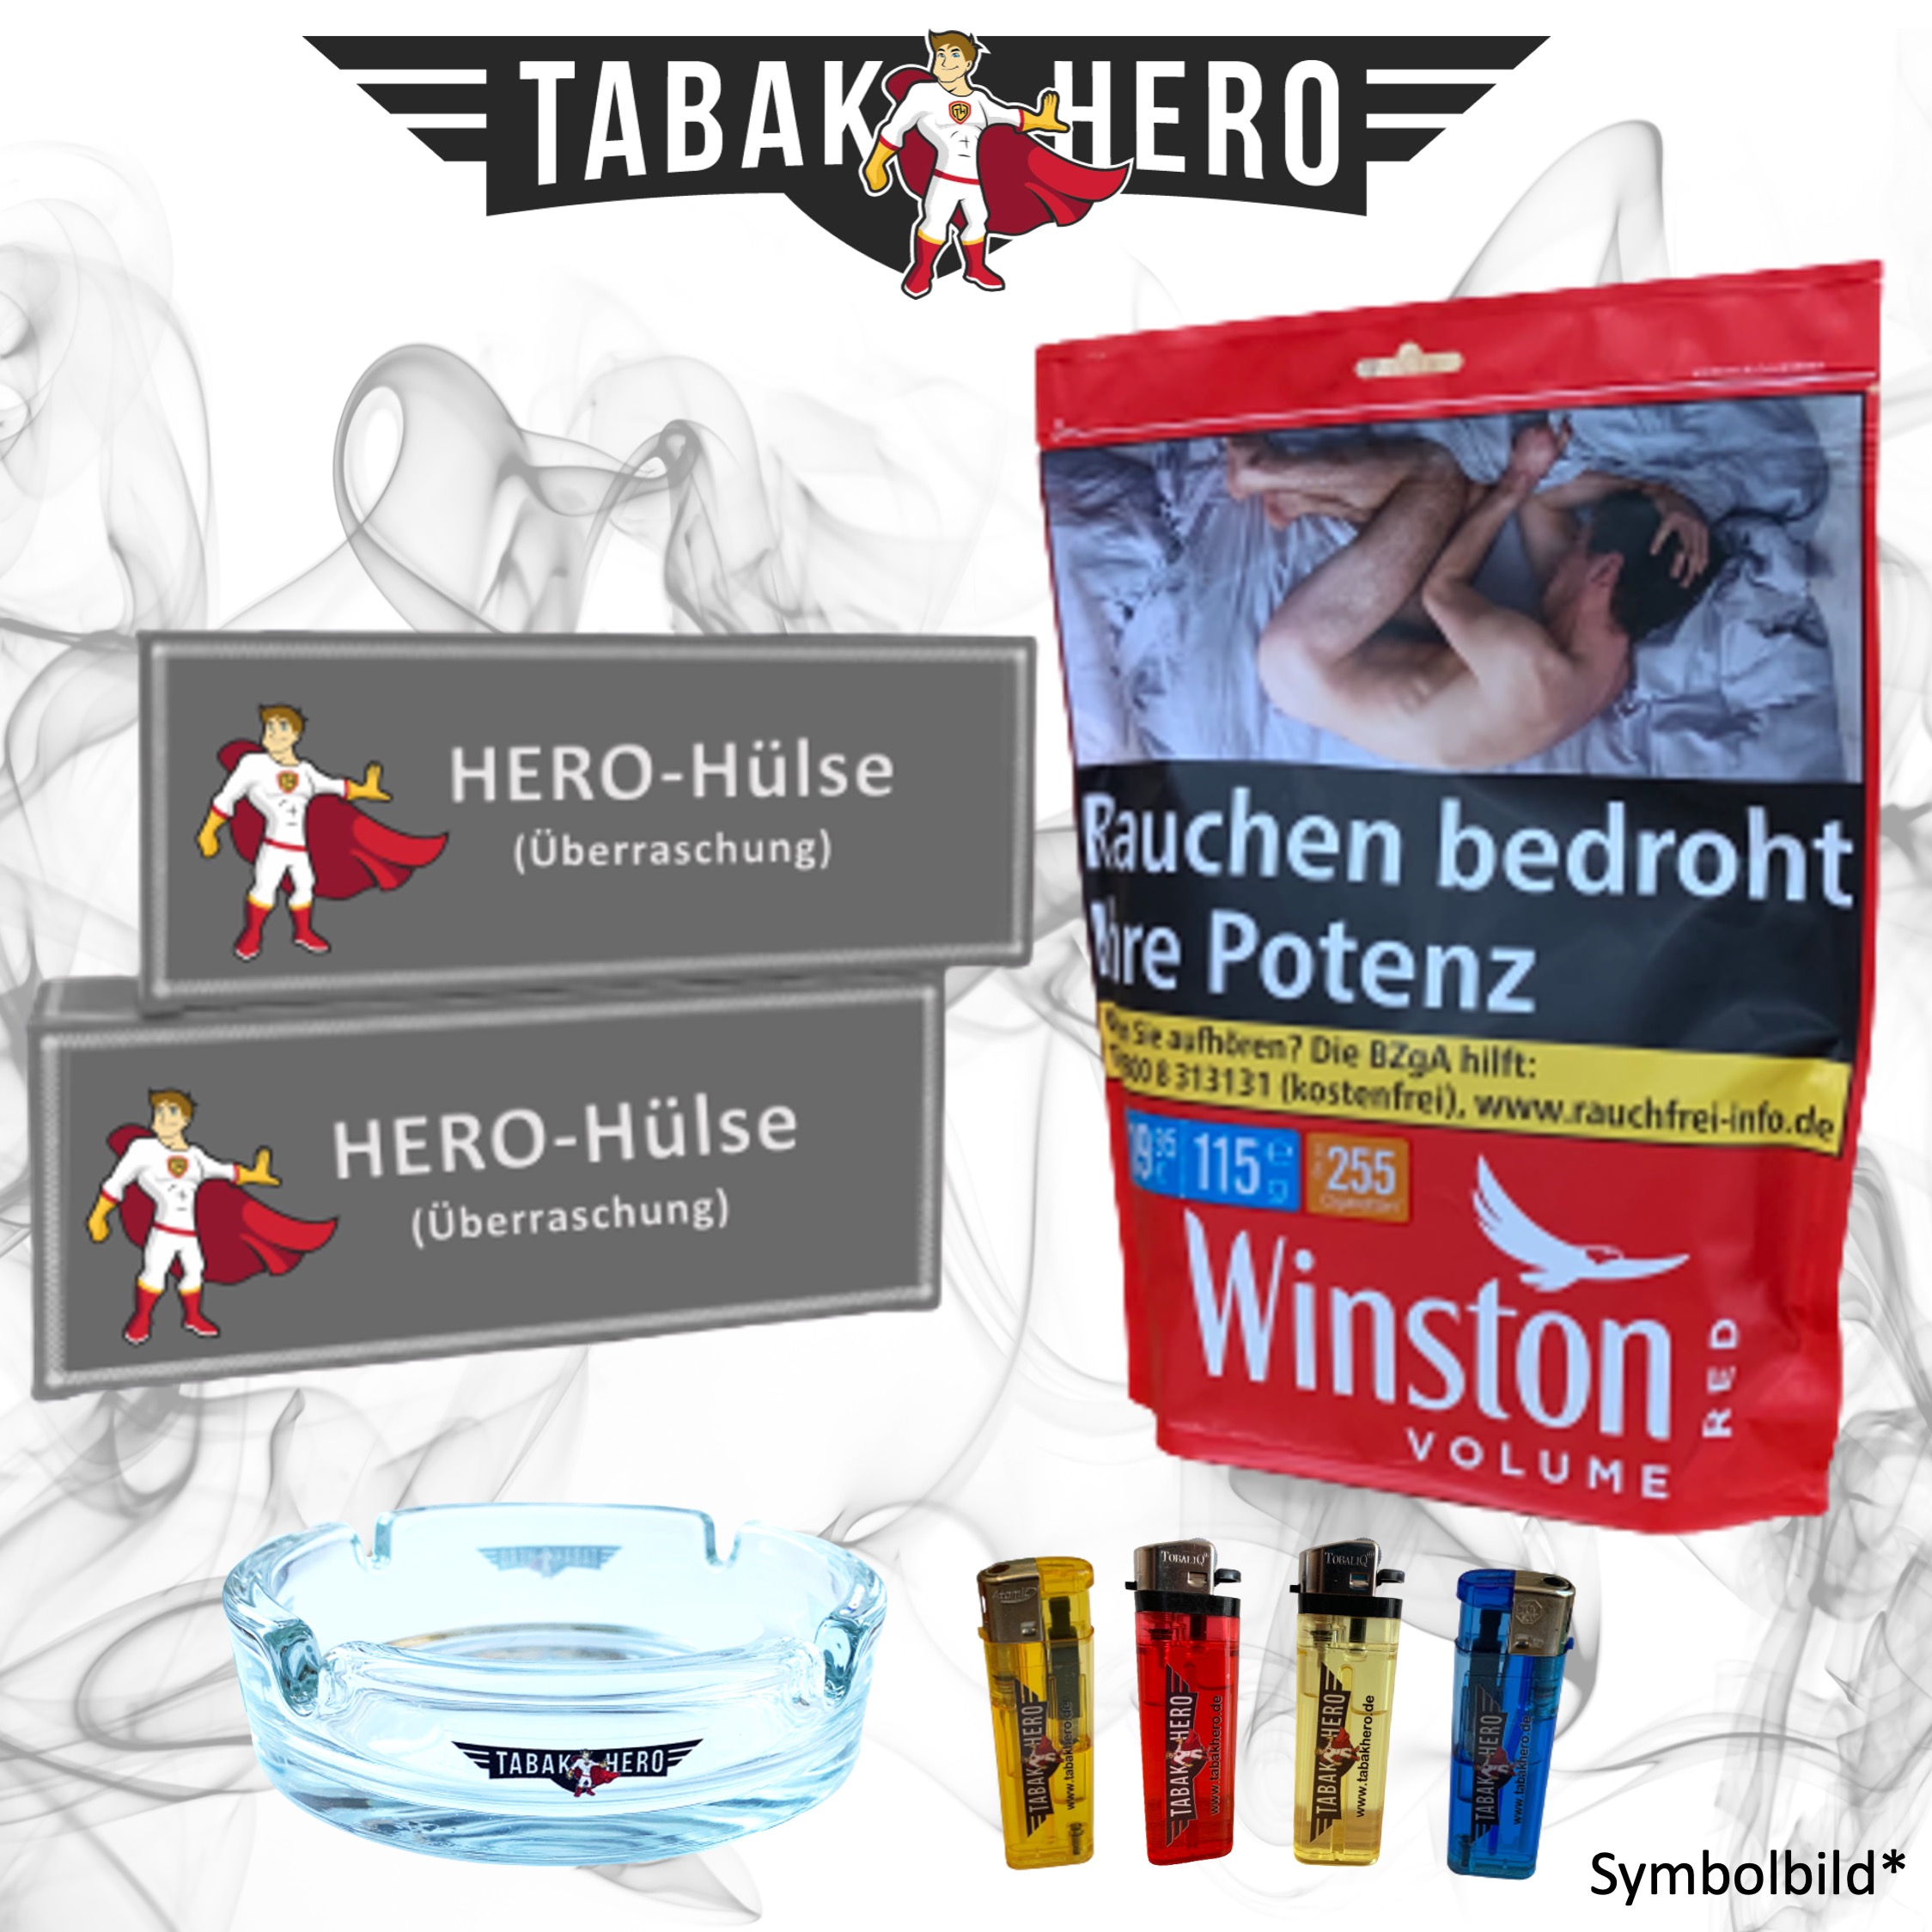 110g Winston Red Zip Beutel Tabak + Hülsen + Zubehör, Stopftabak, Volumentabak